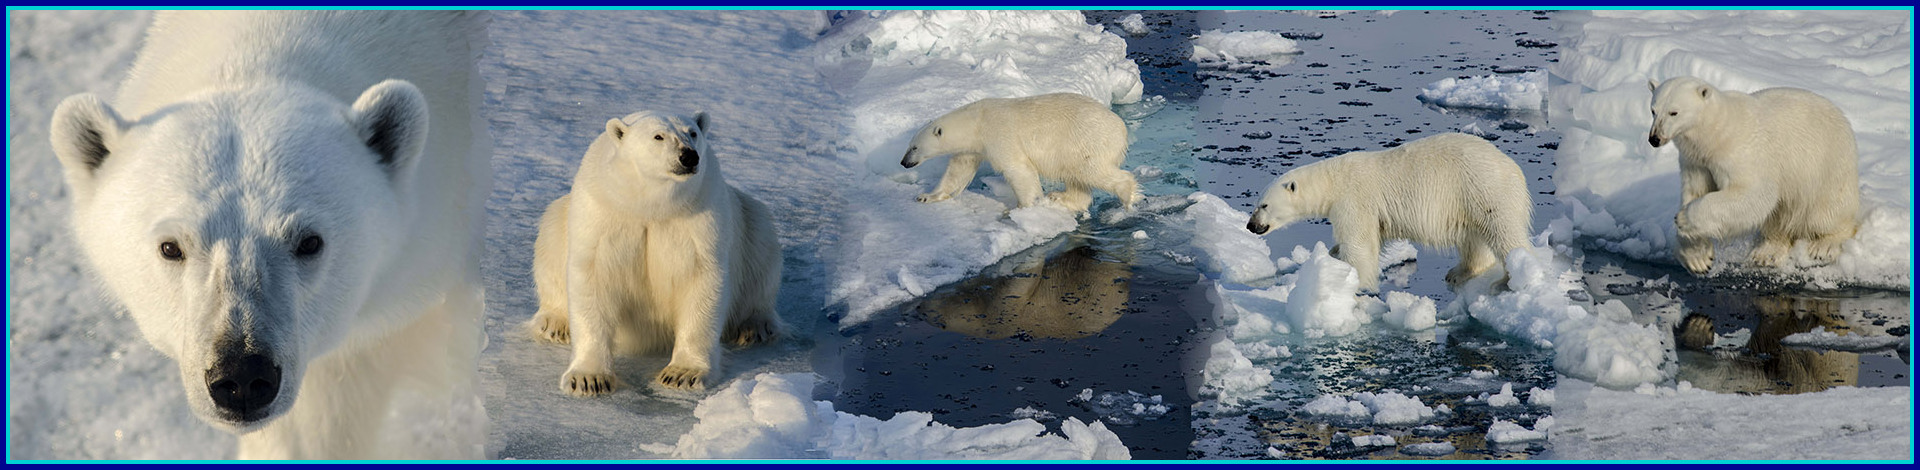 Osos Polares - banquisa Ártica - Islas Svalbard - Noruega